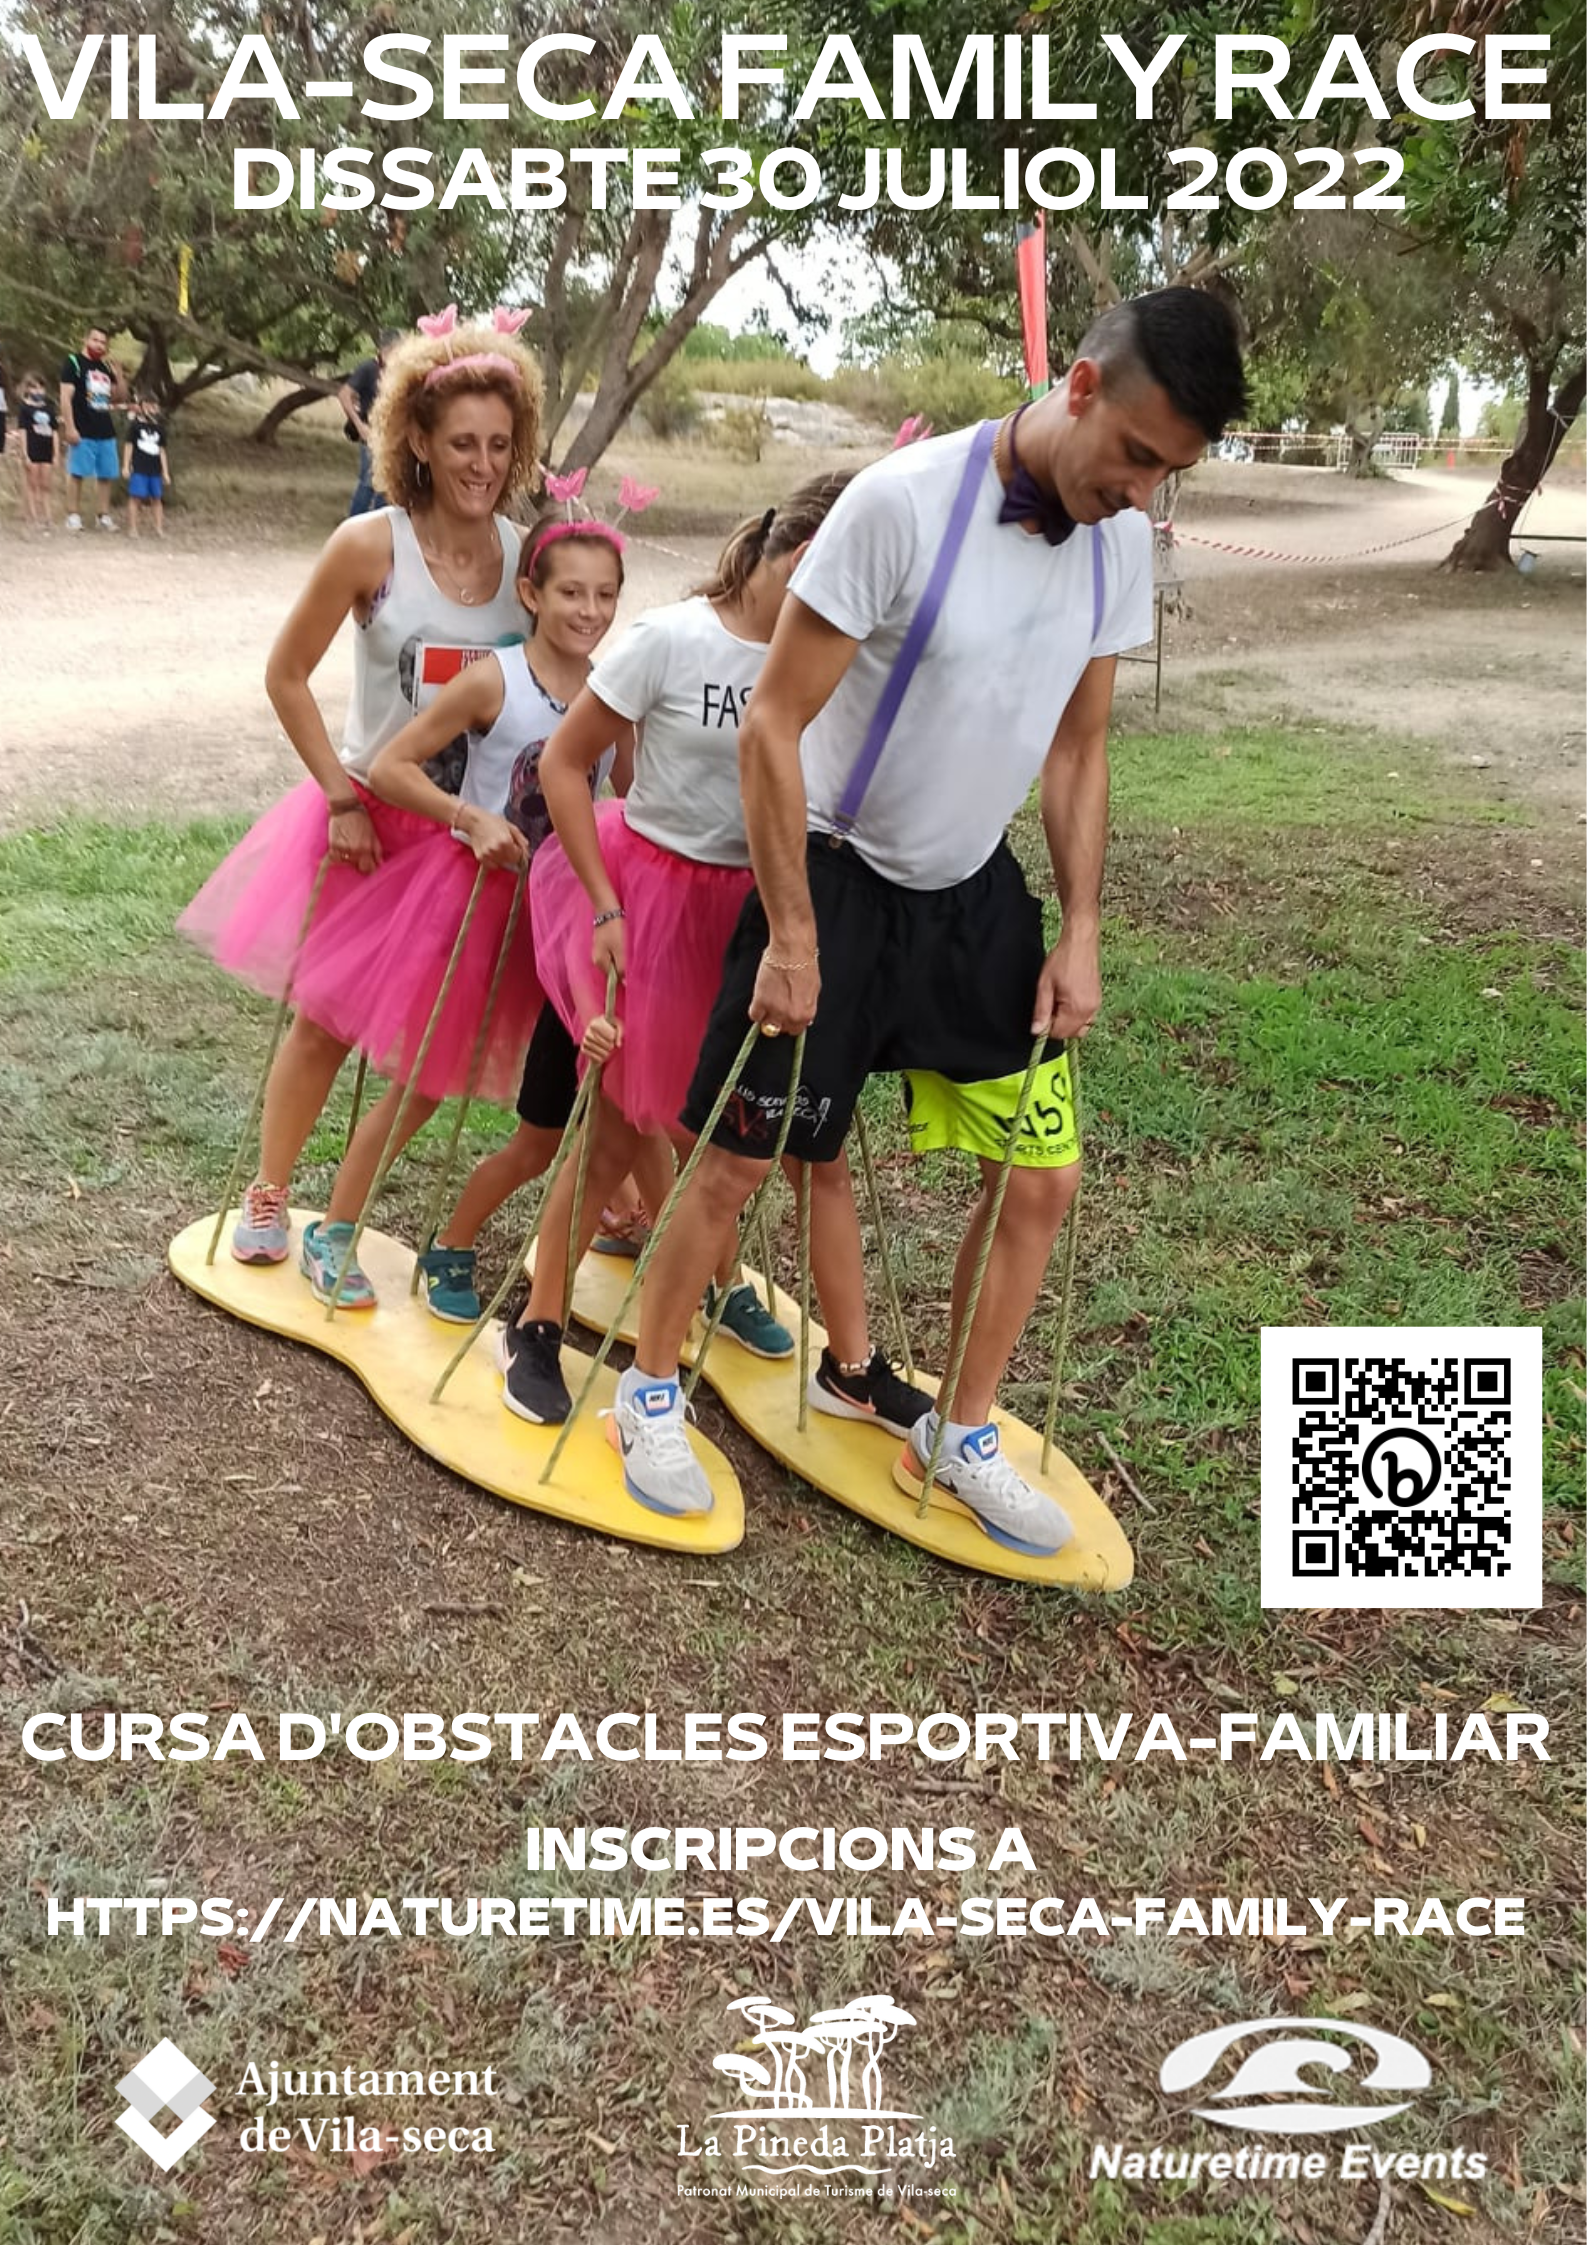 Vila-seca family race 2022